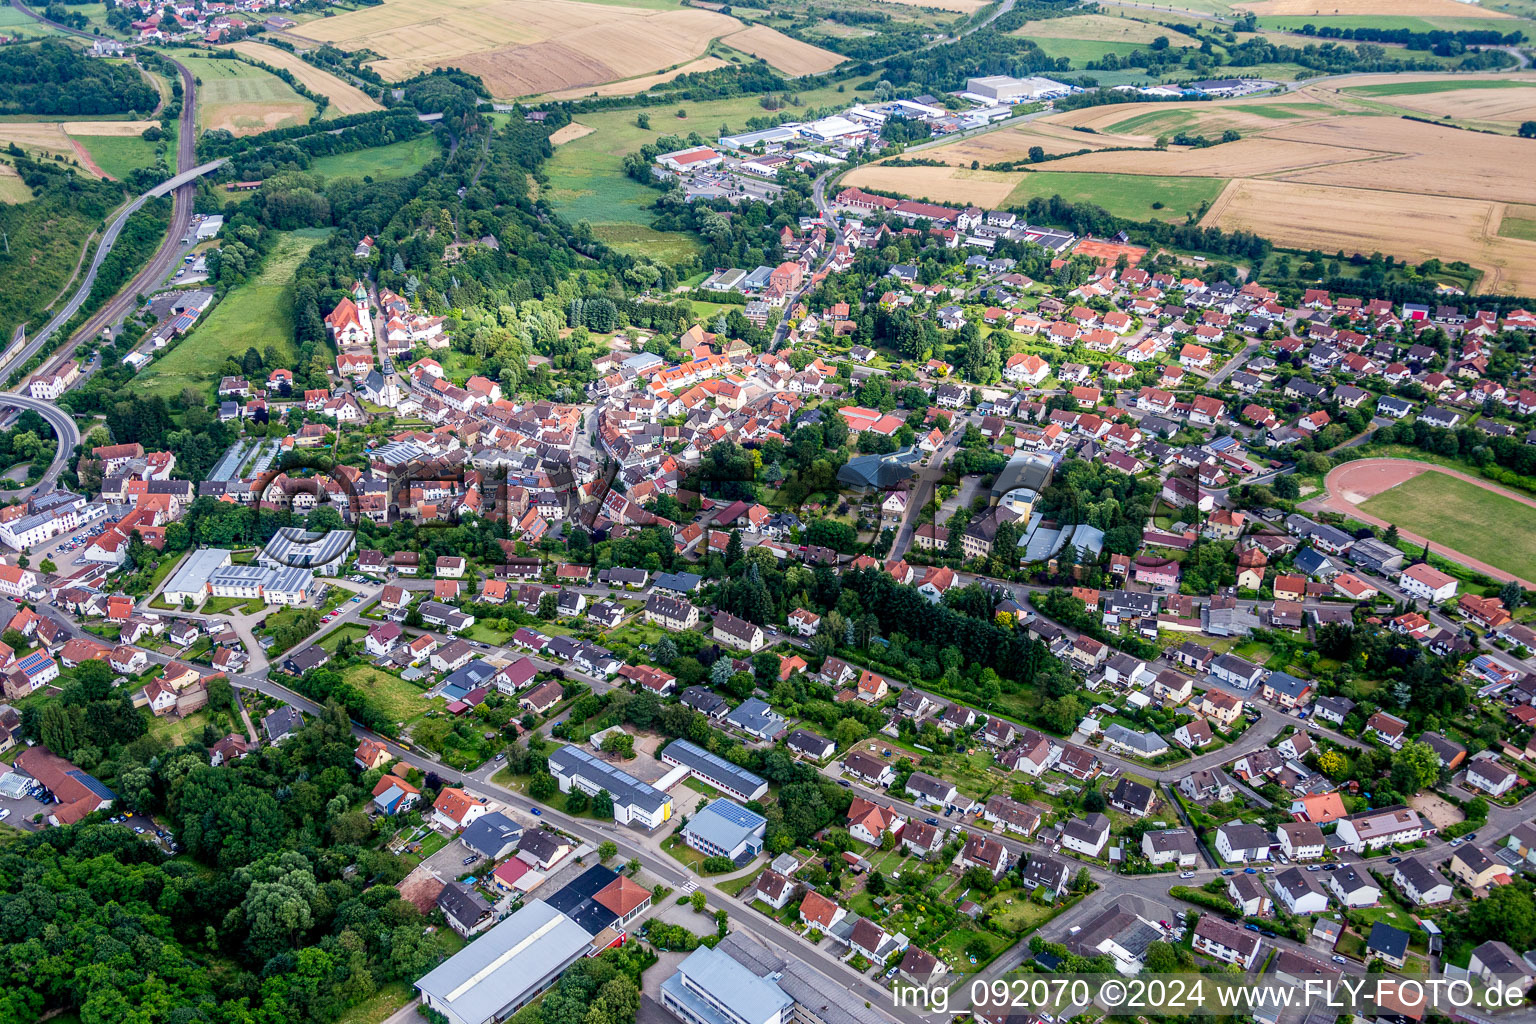 Aerial view of Church building of catholic Church Herz Jesu in Winnweiler in the state Rhineland-Palatinate, Germany